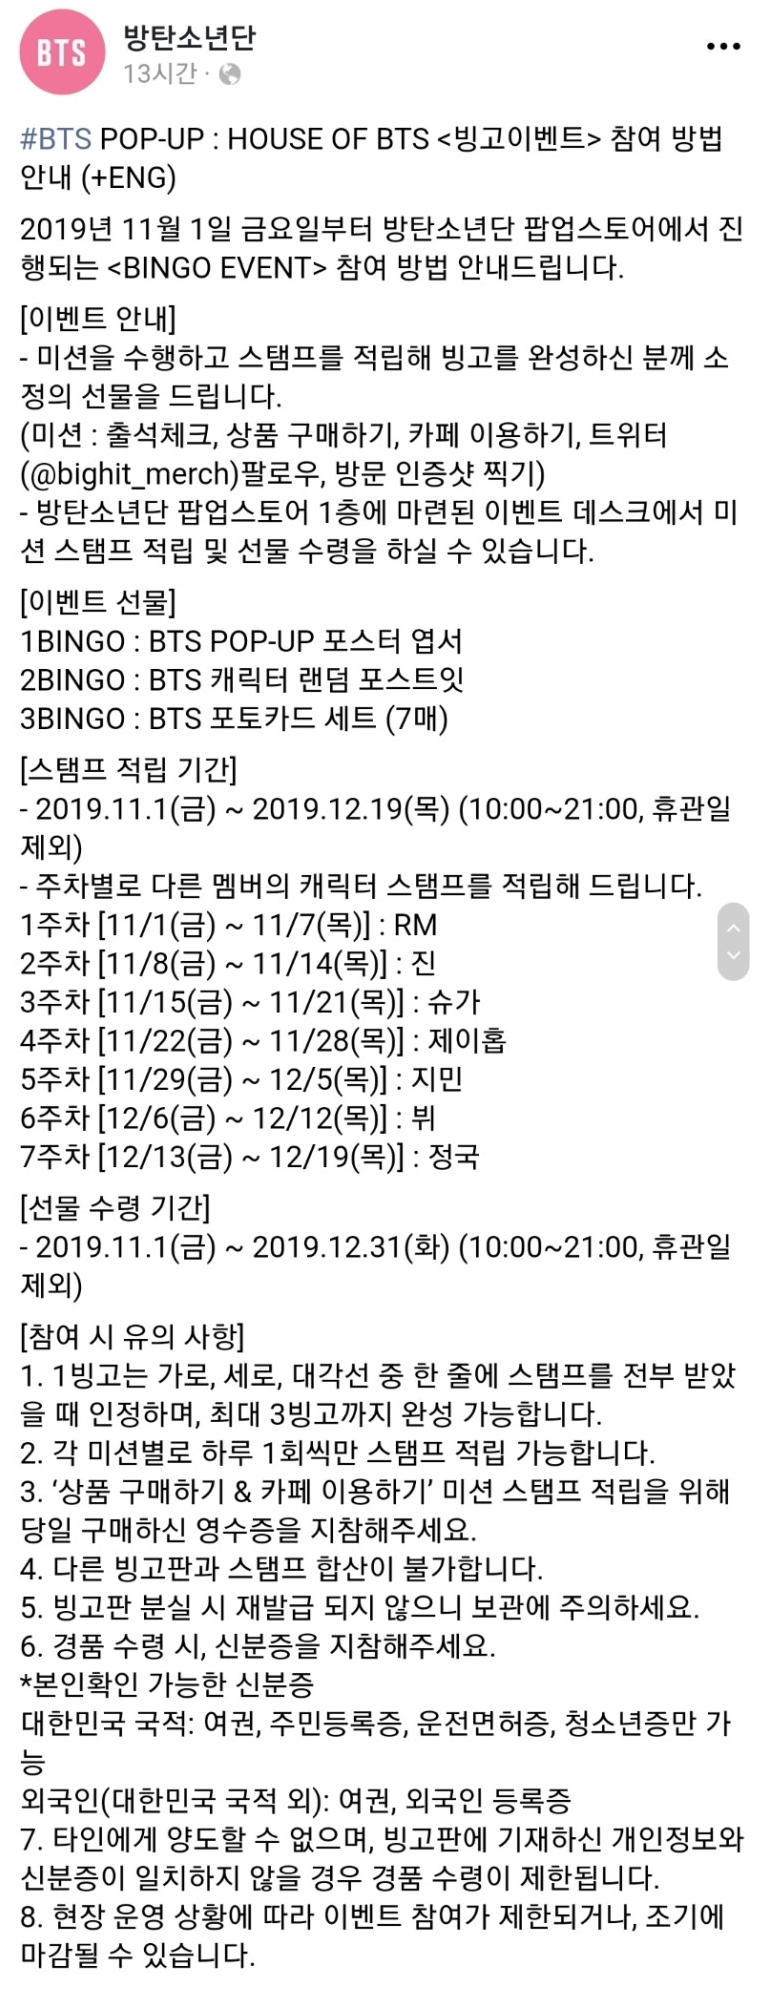 BTS POP-UP : HOUSE OF BTS <빙고이벤트> 참여 비법 안내 정보